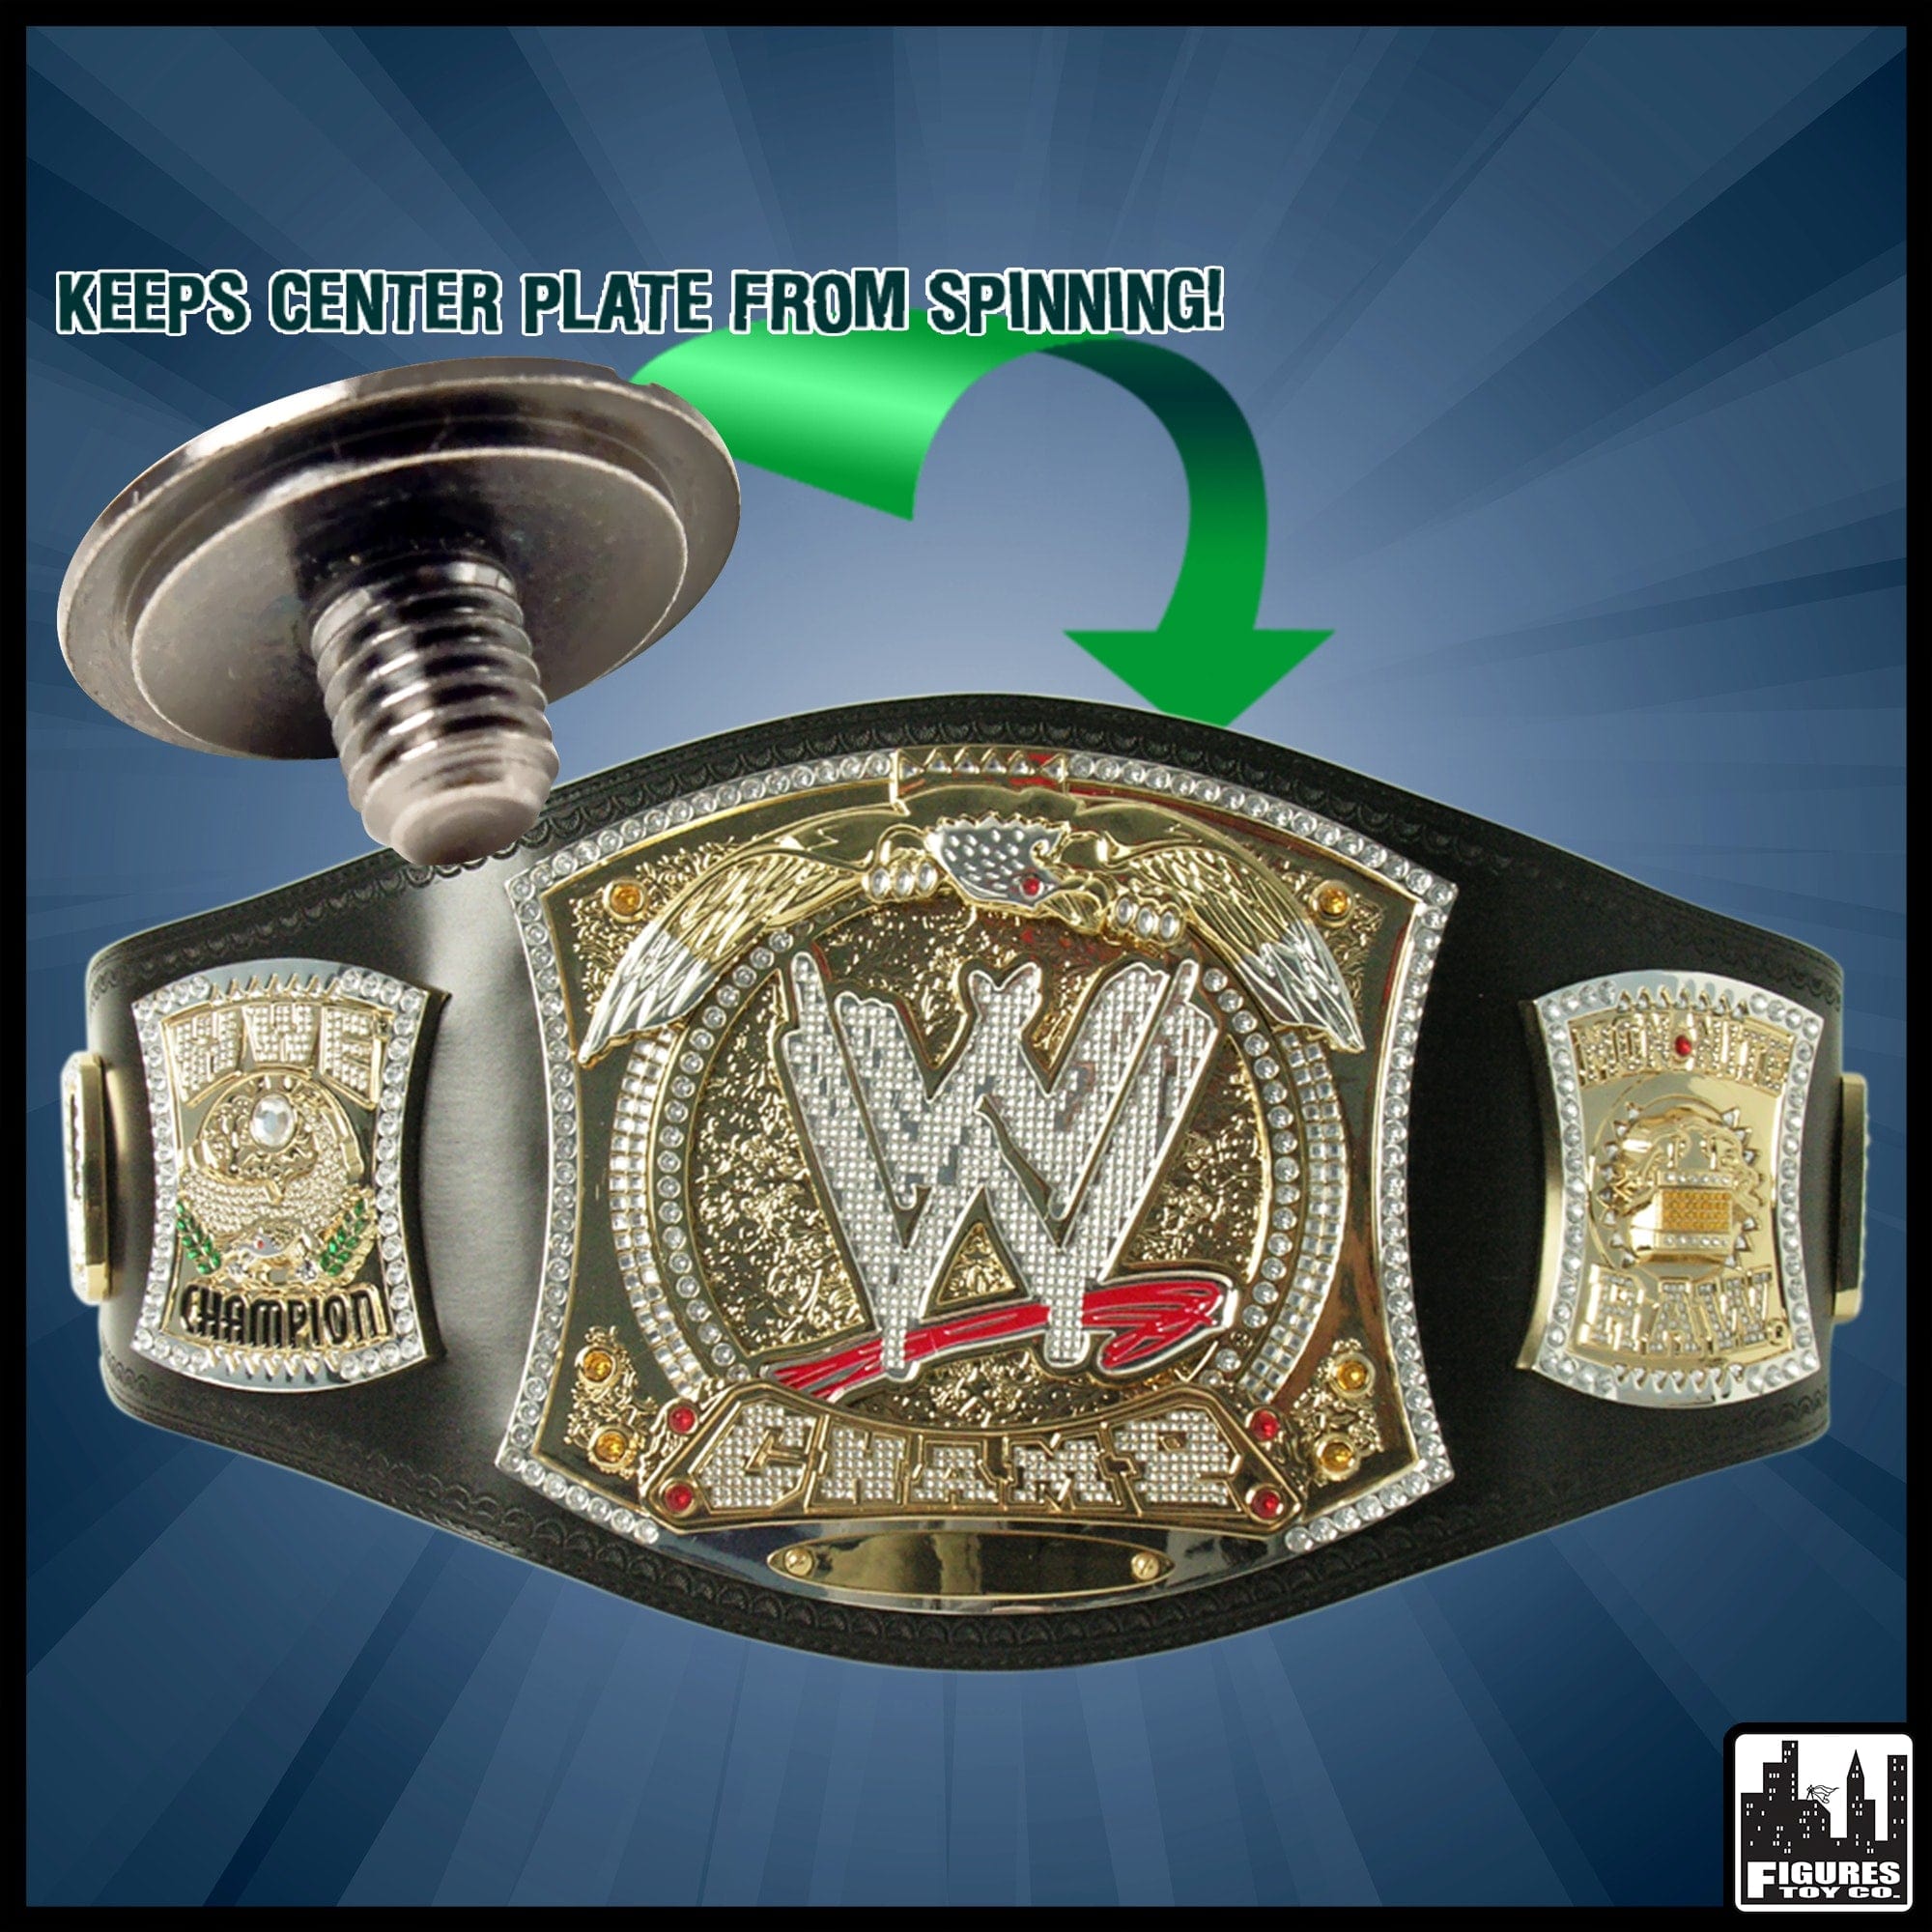 Set of 10 Gold Replica Belt Screws for WWE Championship Belts